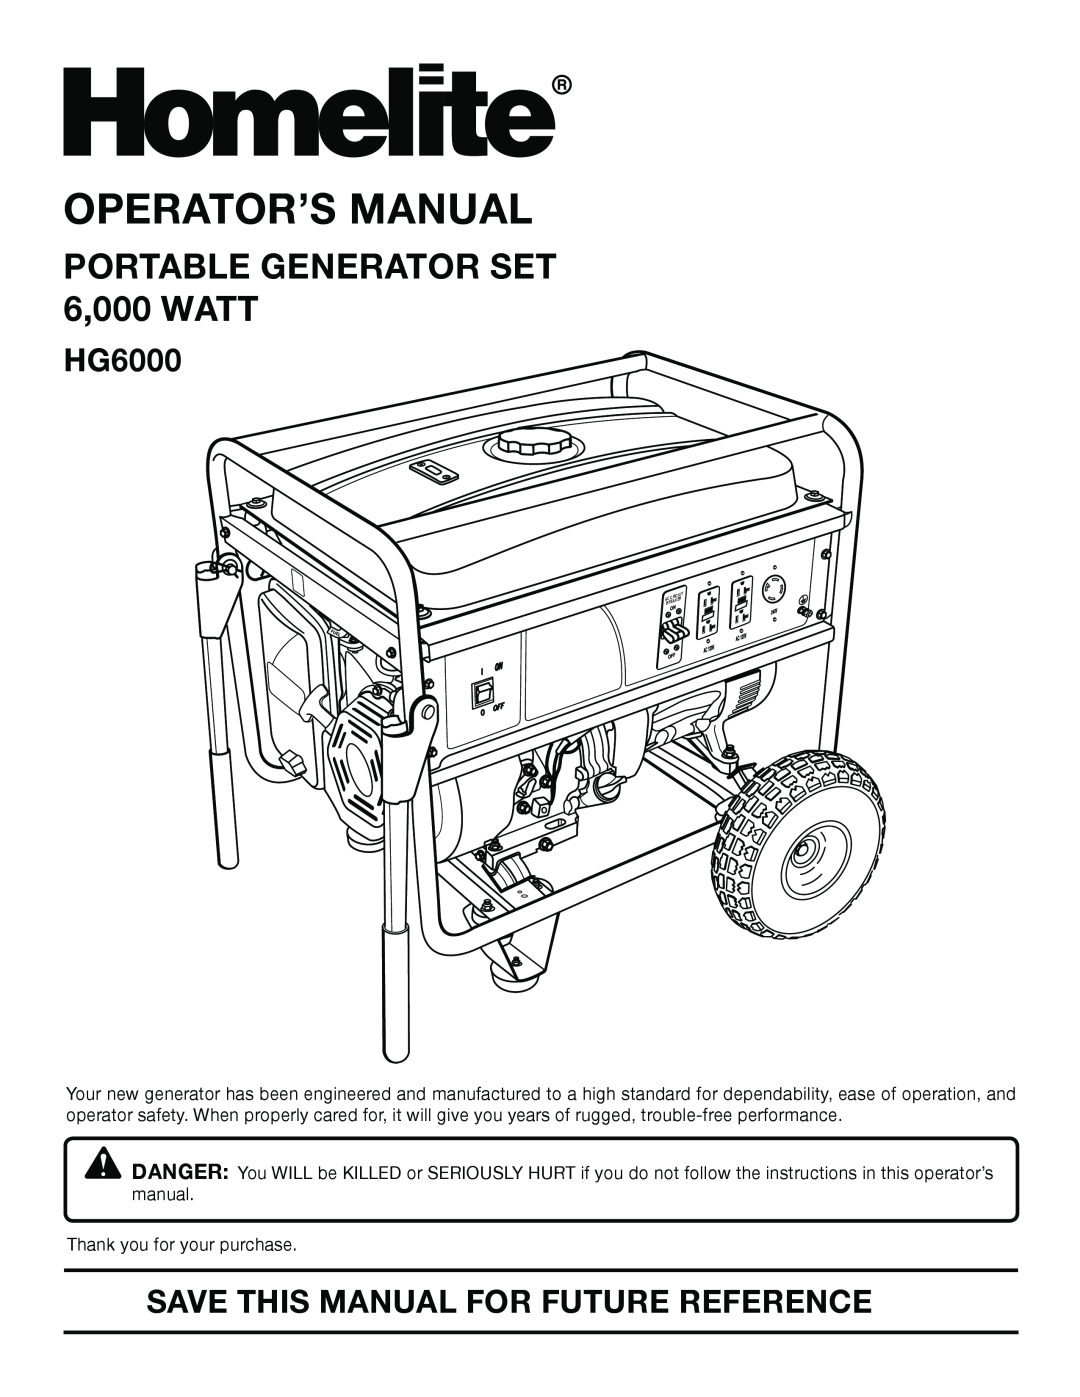 Homelite HG6000 manual Operator’S Manual, PORTABLE GENERATOR SET 6,000 WATT, Save This Manual For Future Reference 